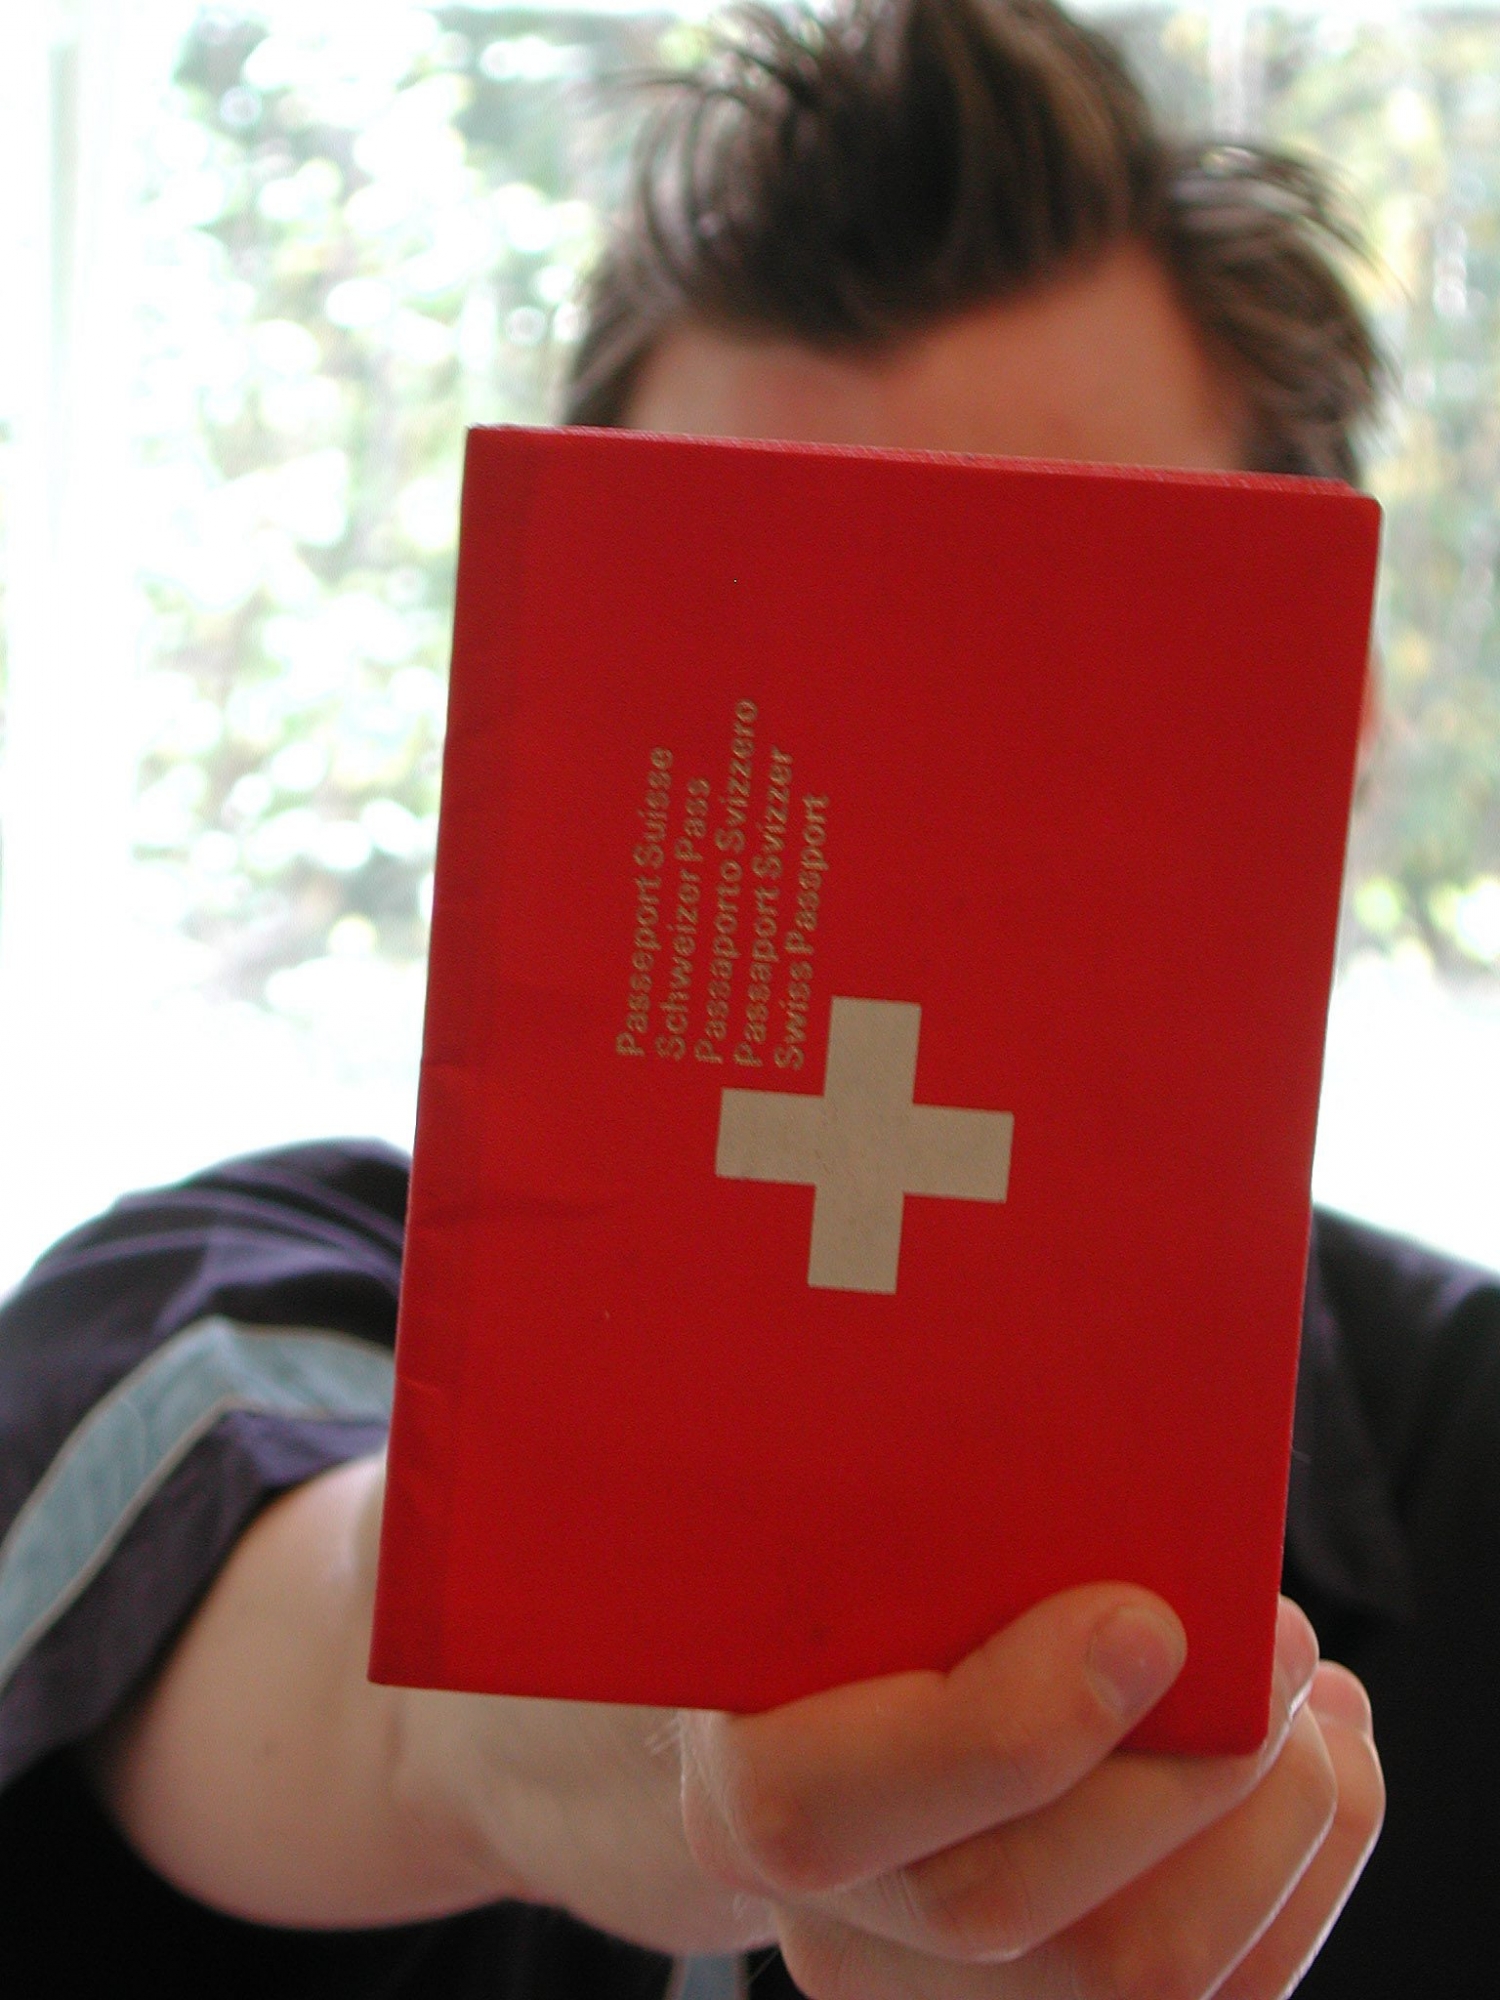 naturalisation passeport Suisse étranger frontière immigration papier naturalisation passeport Suisse étranger frontière immigration